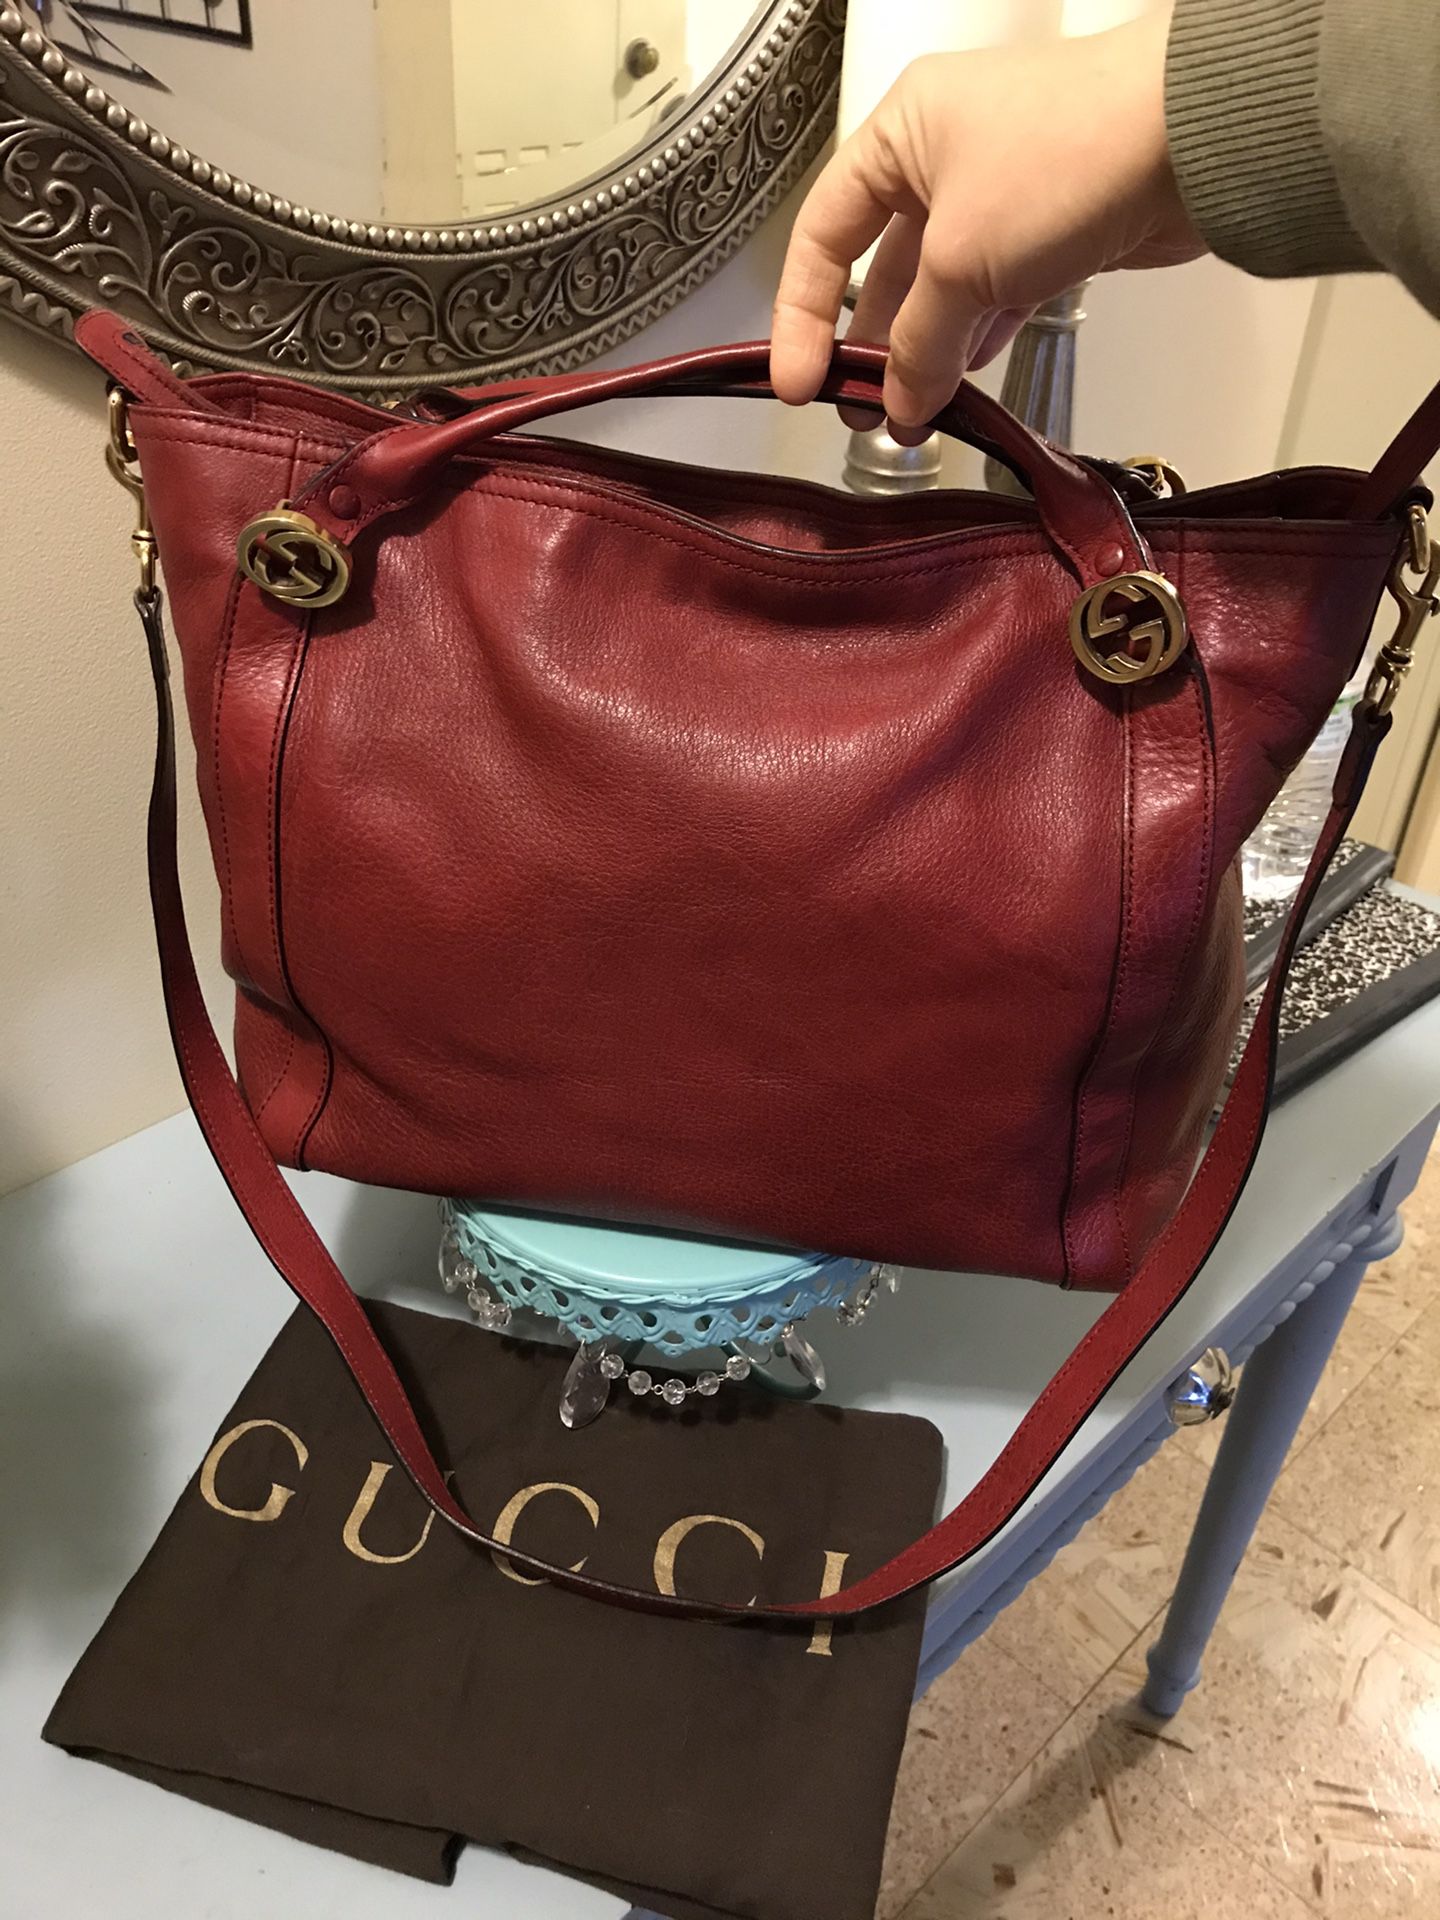 Authentic Gucci GG tote bag